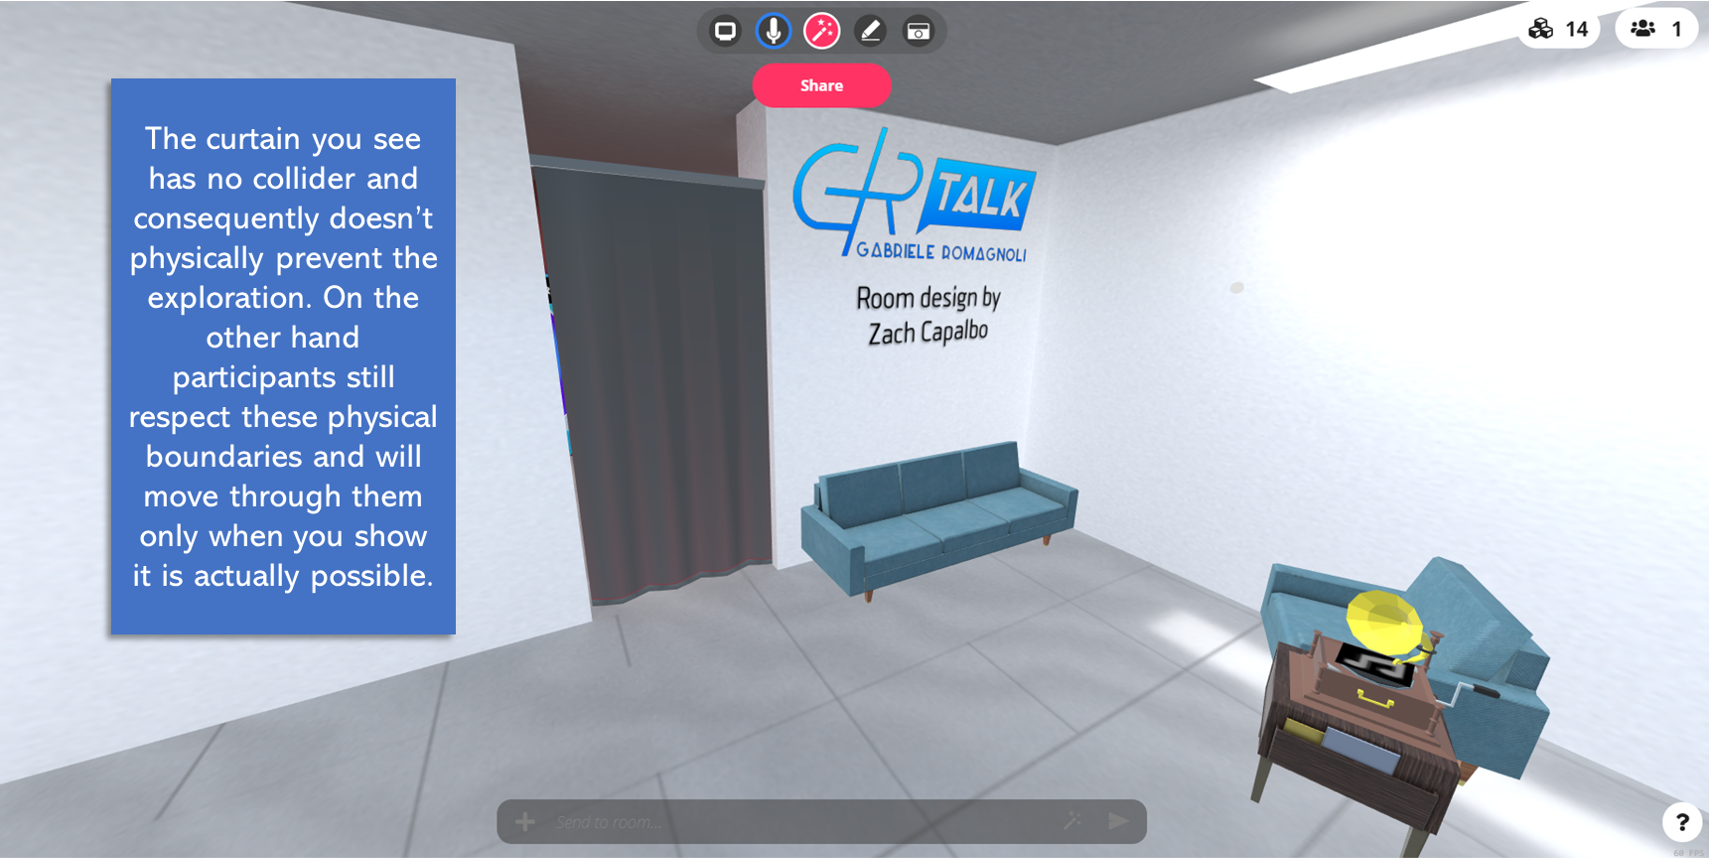 A virtual meeting room